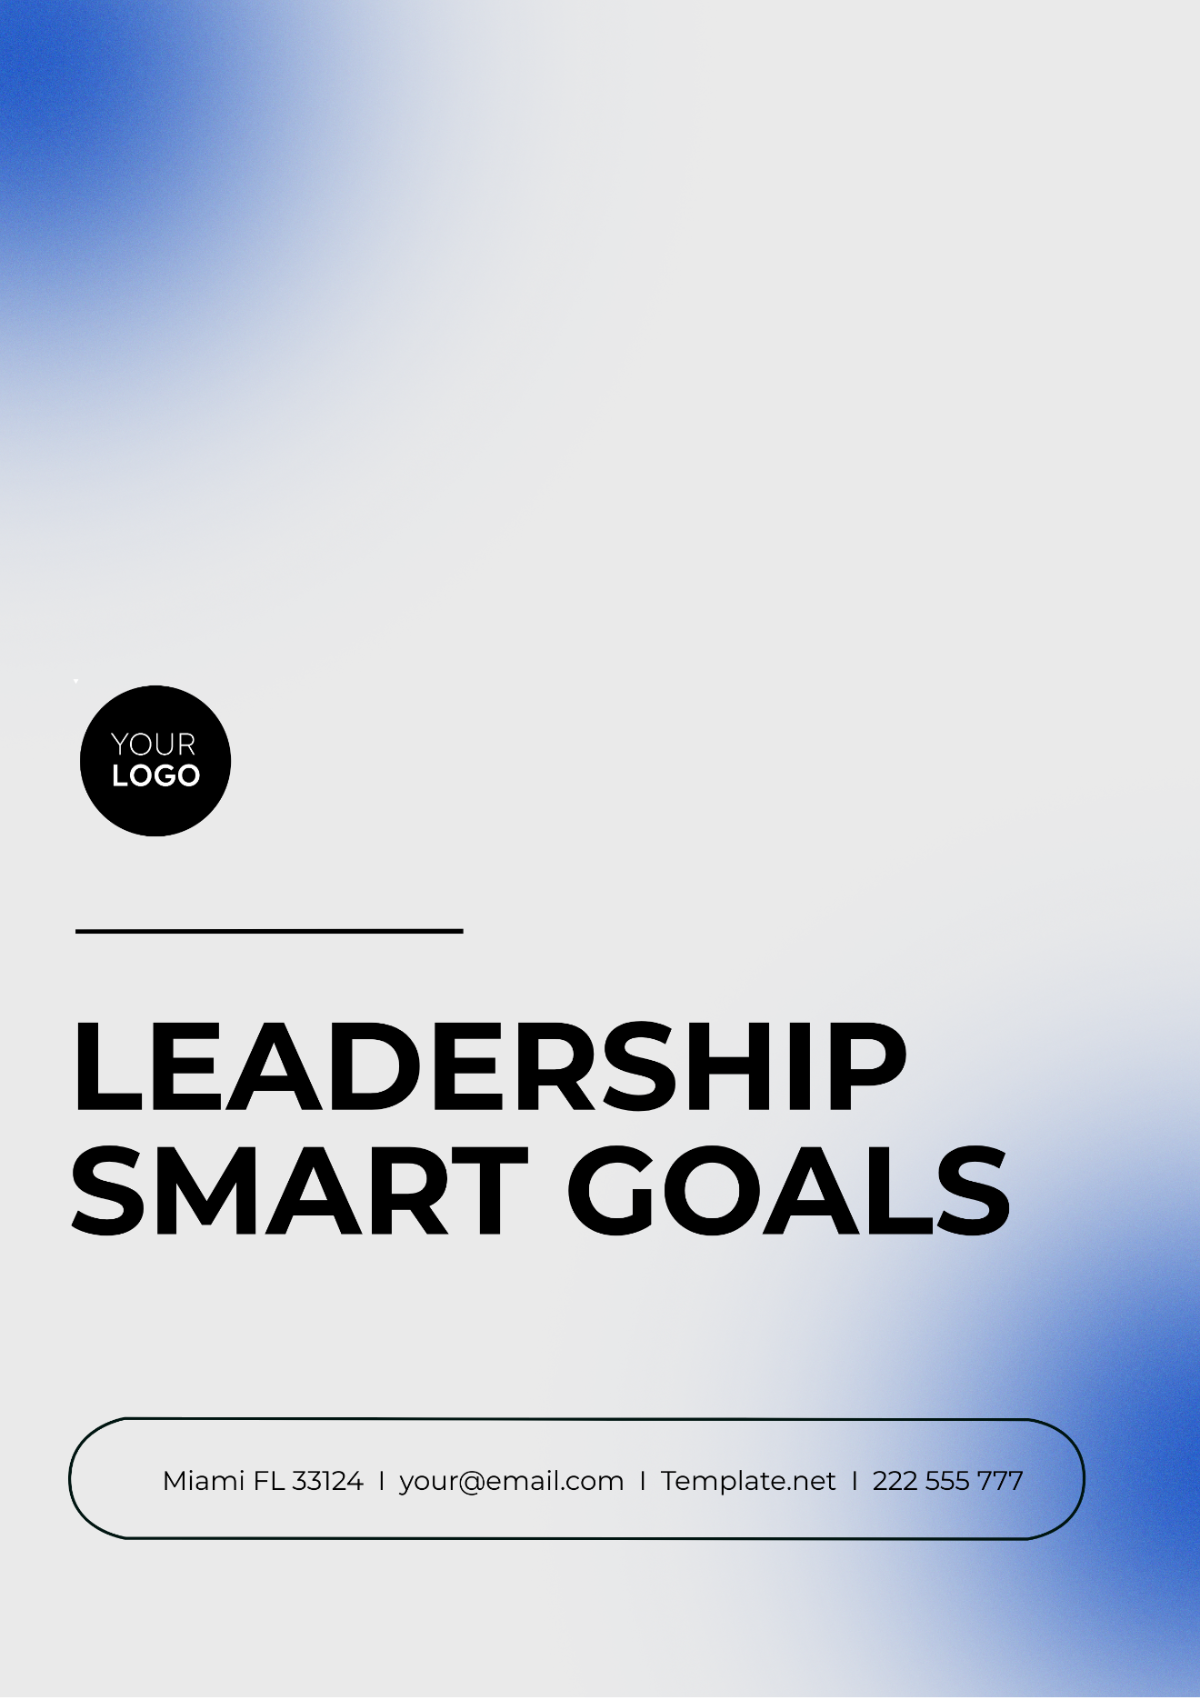 Leadership SMART Goals Template